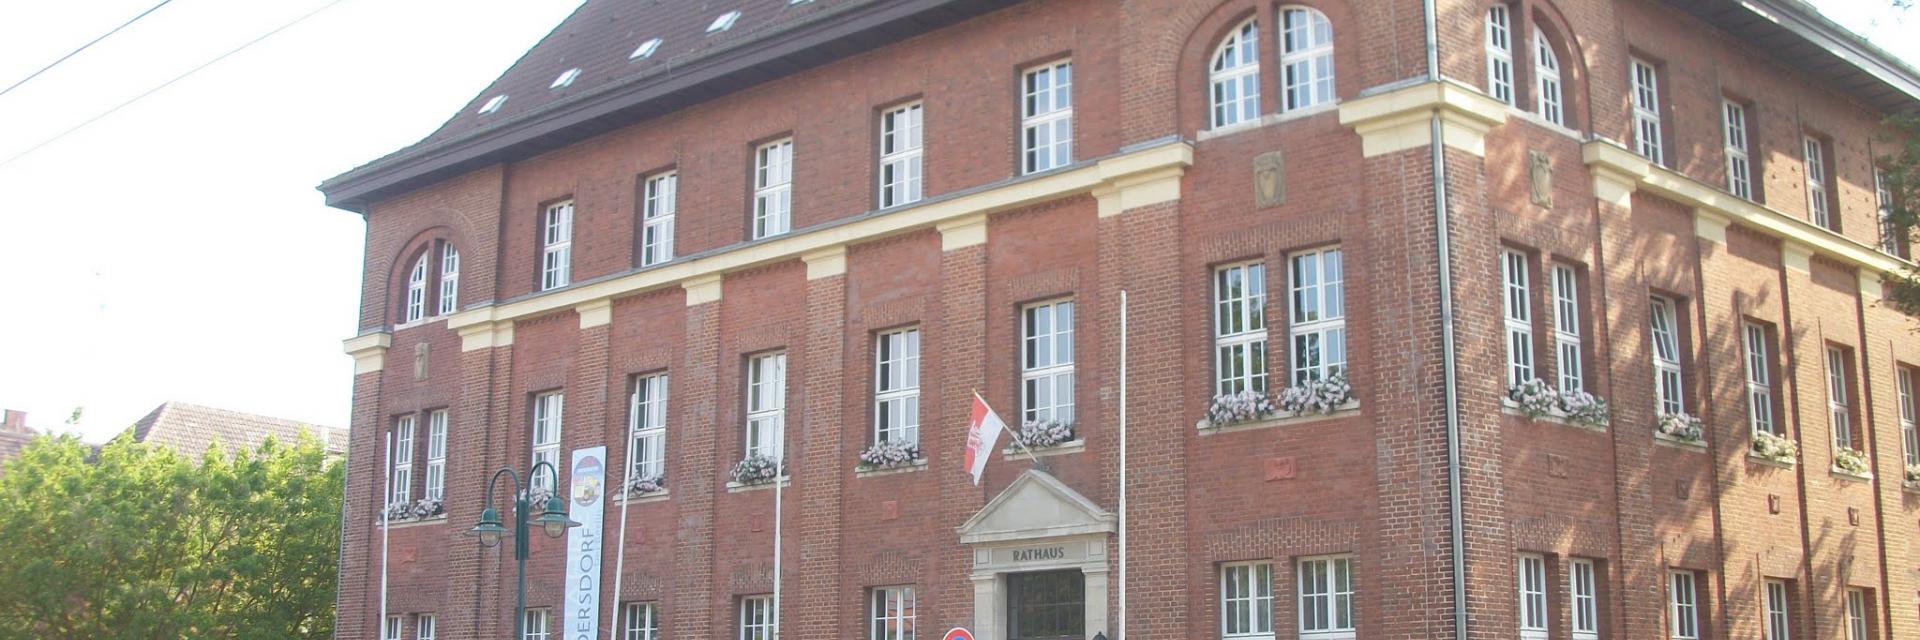 Rüdersdorf Rathaus